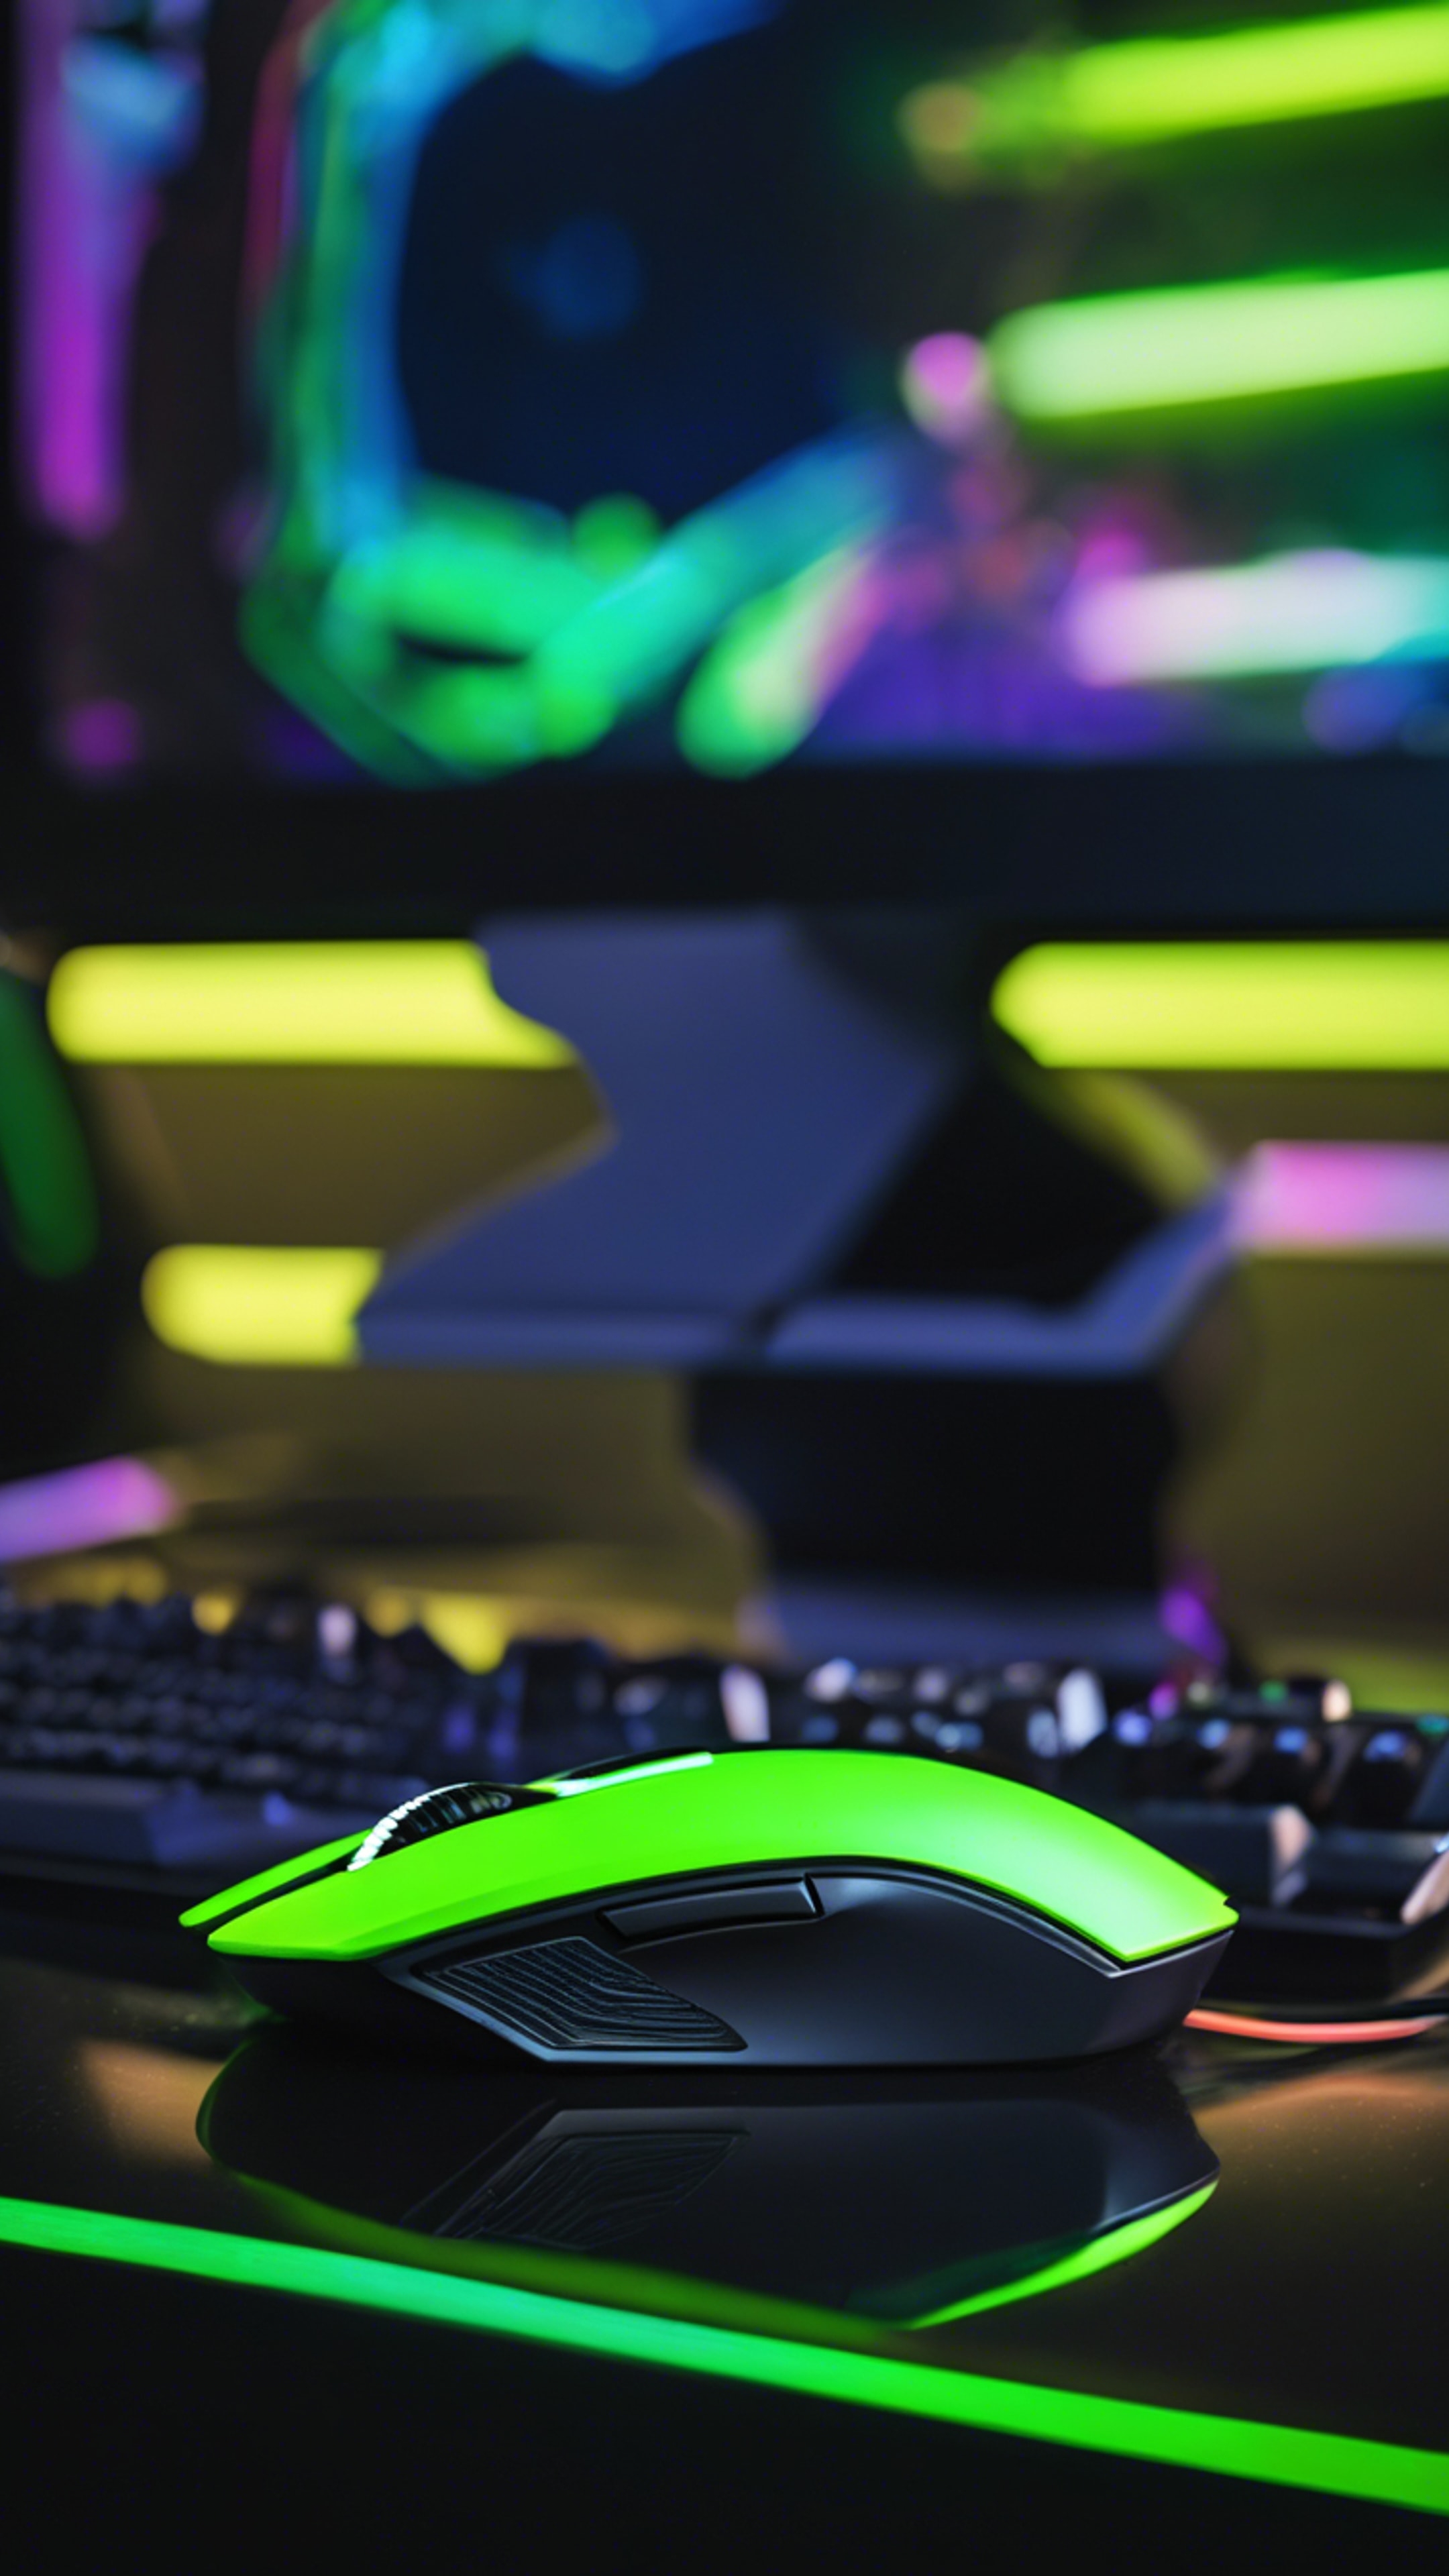 A cool neon green high-tech gaming mouse on a futuristic black desk setup. Fondo de pantalla[6d2a2b9049aa4c81a995]